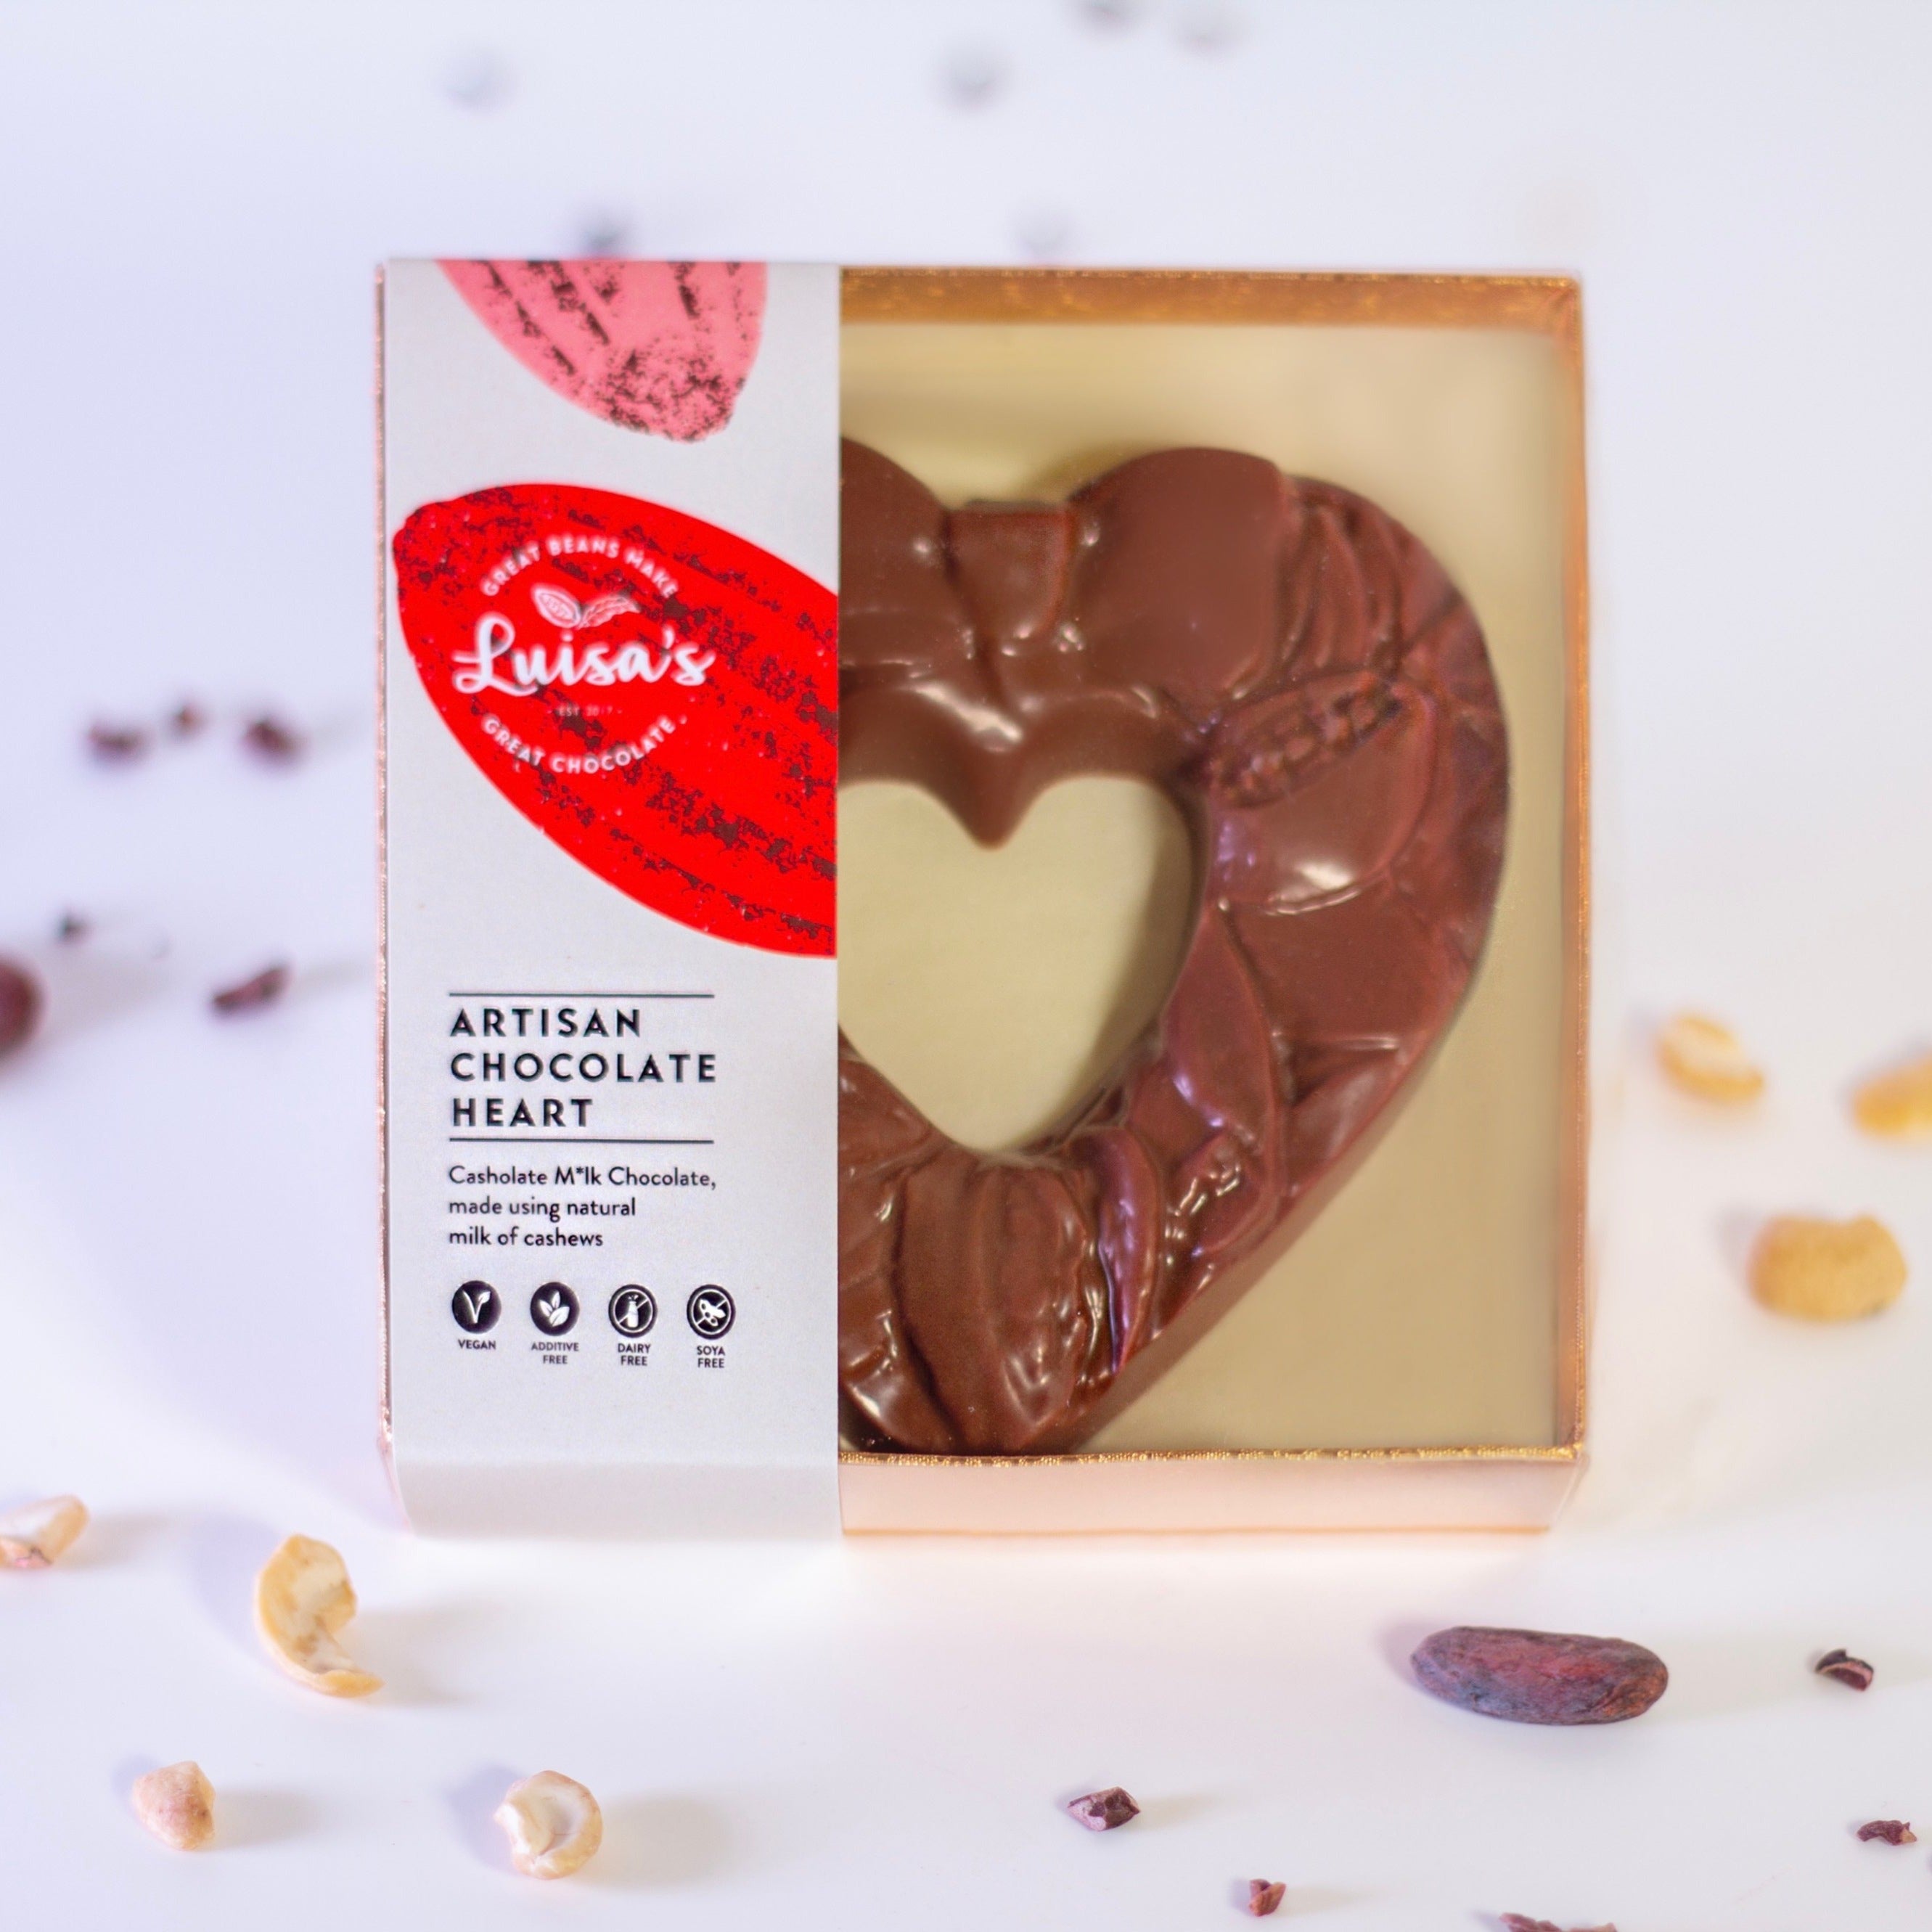 The M*lk Casholate Artisan Chocolate Heart